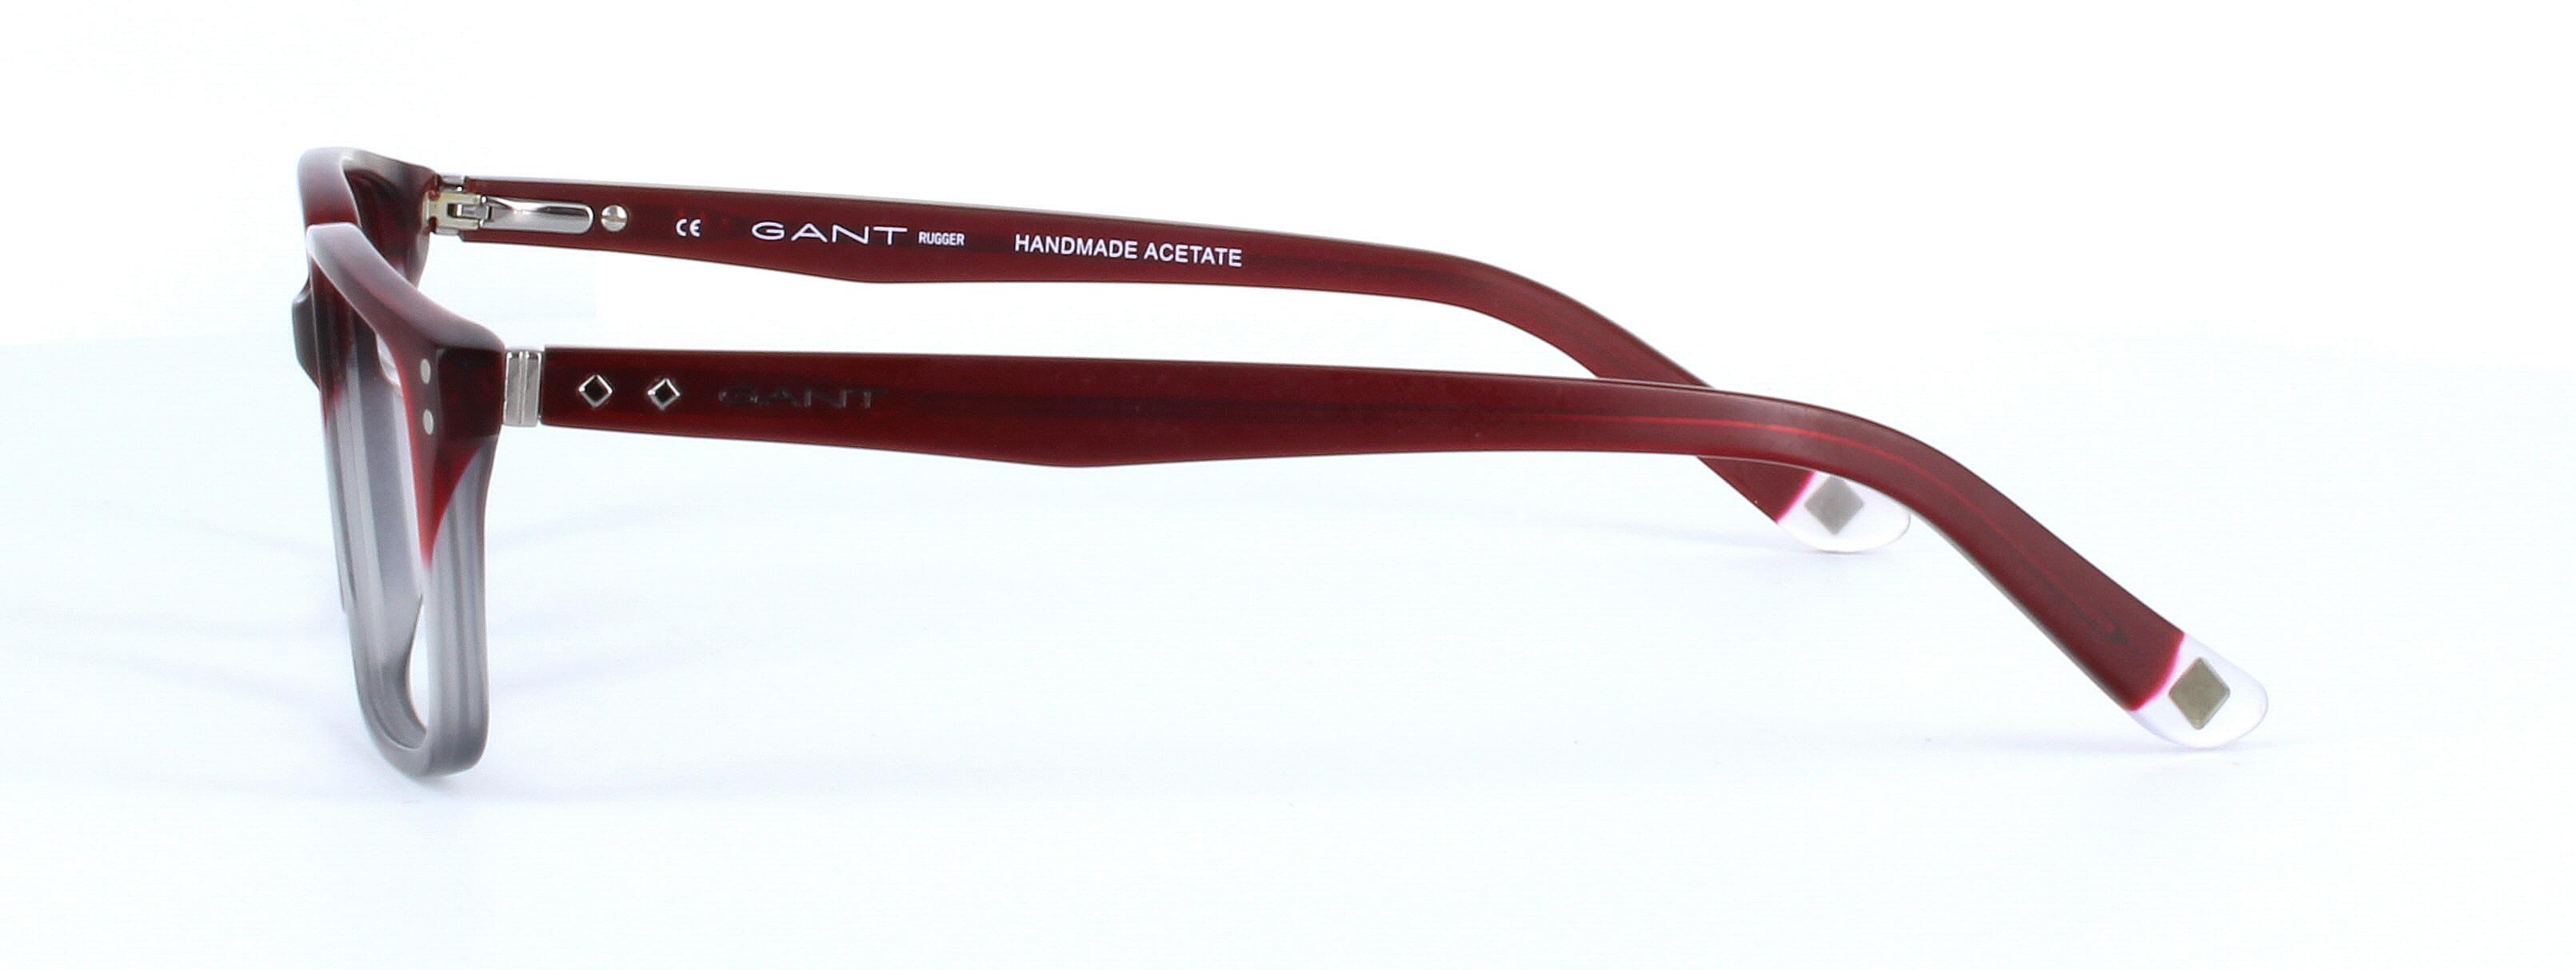 Gant 105 - Unisex 2-tone matt burgundy and grey acetate glasses - image view 2